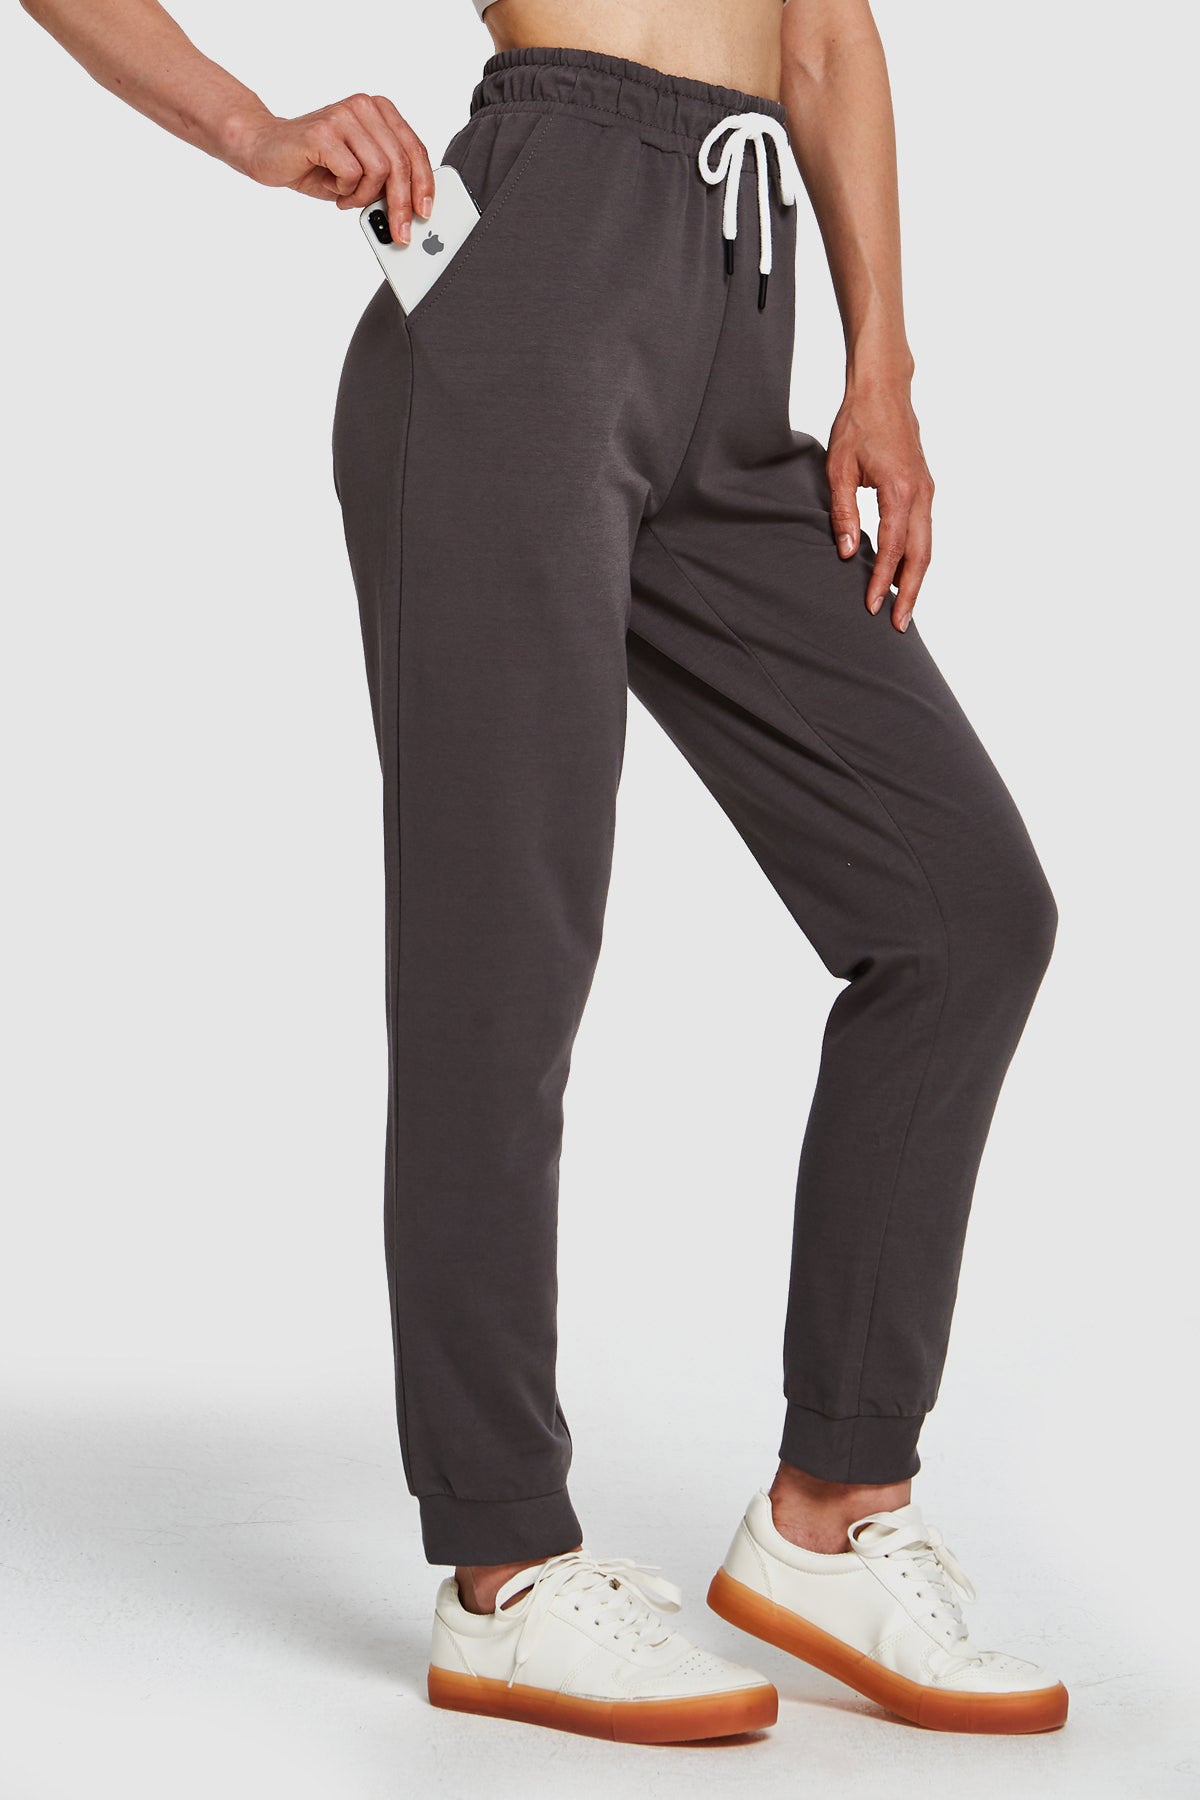 Women's Cotton Joggers Sweatpants with Pockets and Belt Loop Lounge Pants  Ladies Jogging Bottoms – PULI